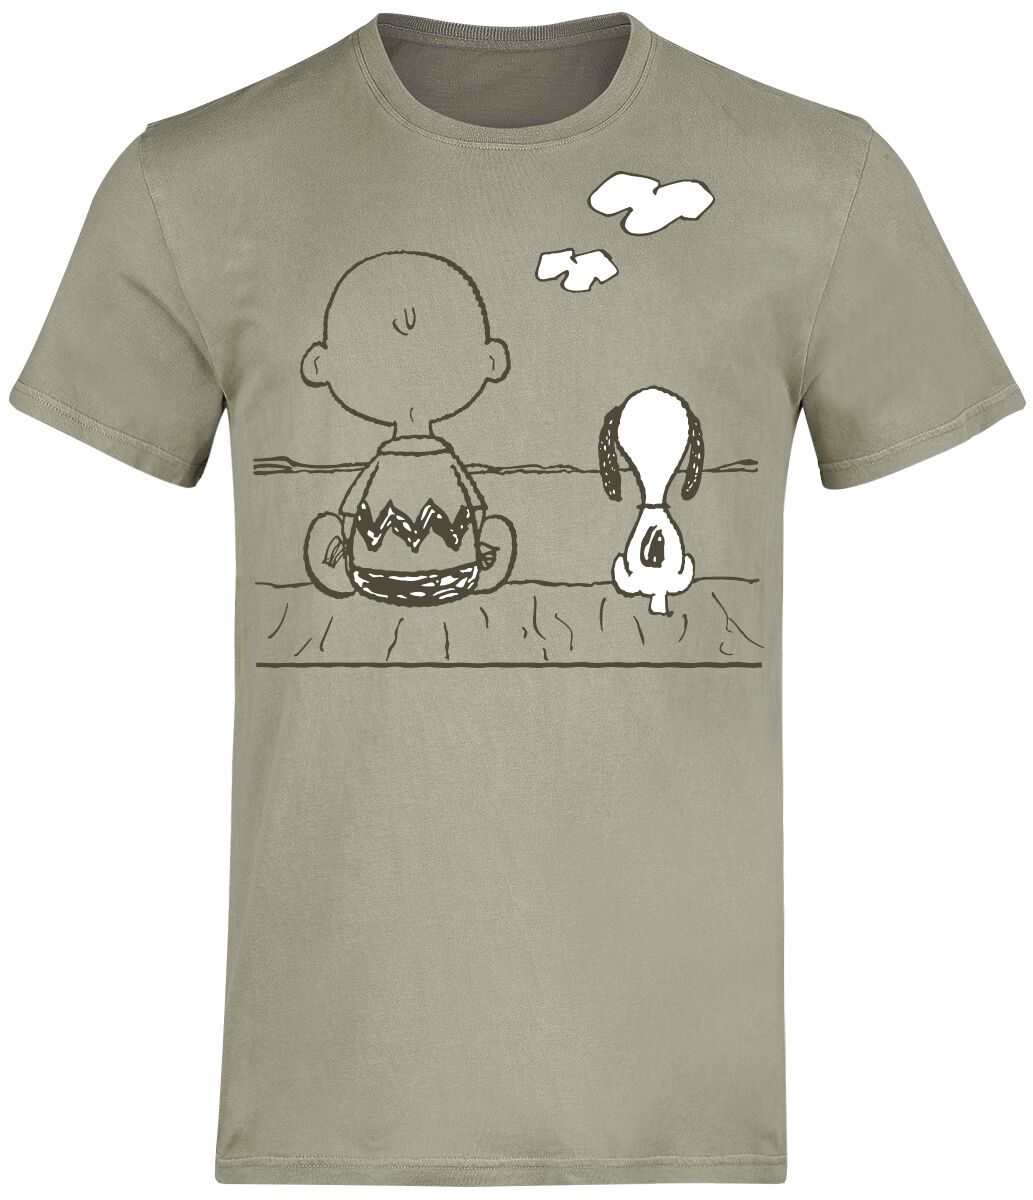 Peanuts Charlie Brown und Snoopy T-Shirt grün in XXL